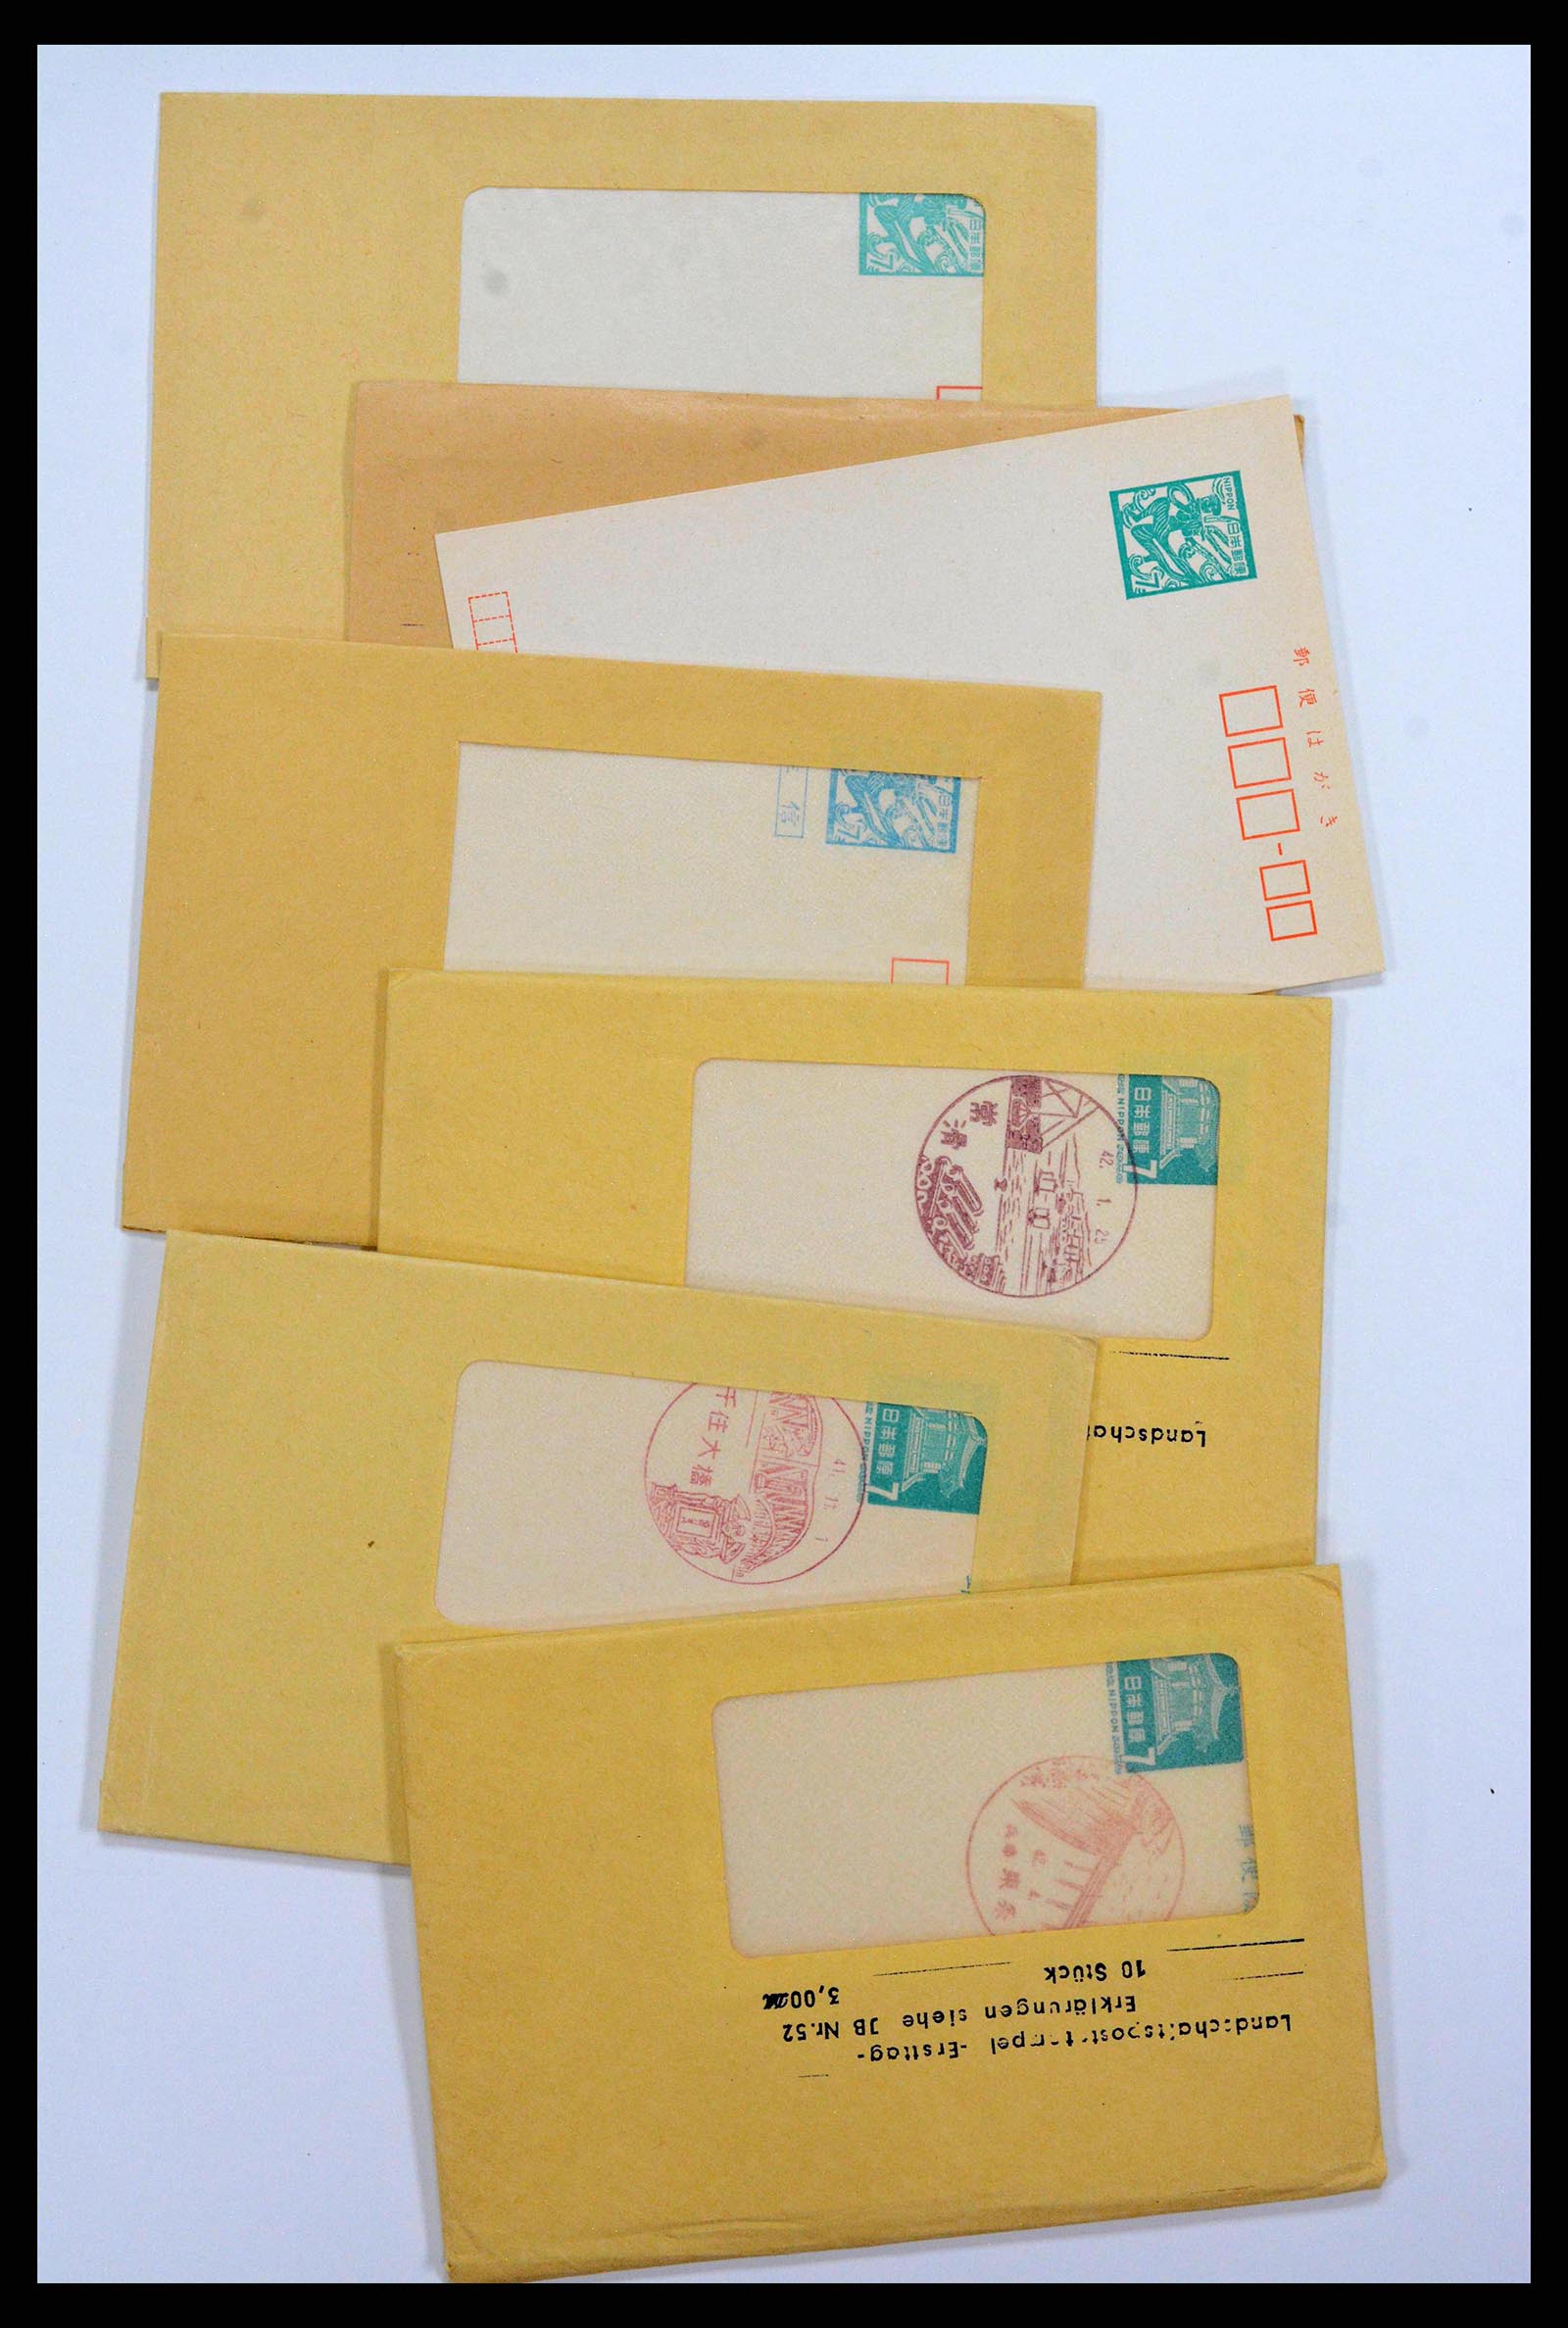 38217 0015 - Stamp collection 38217 Japan postal stationeries 1949-2018.